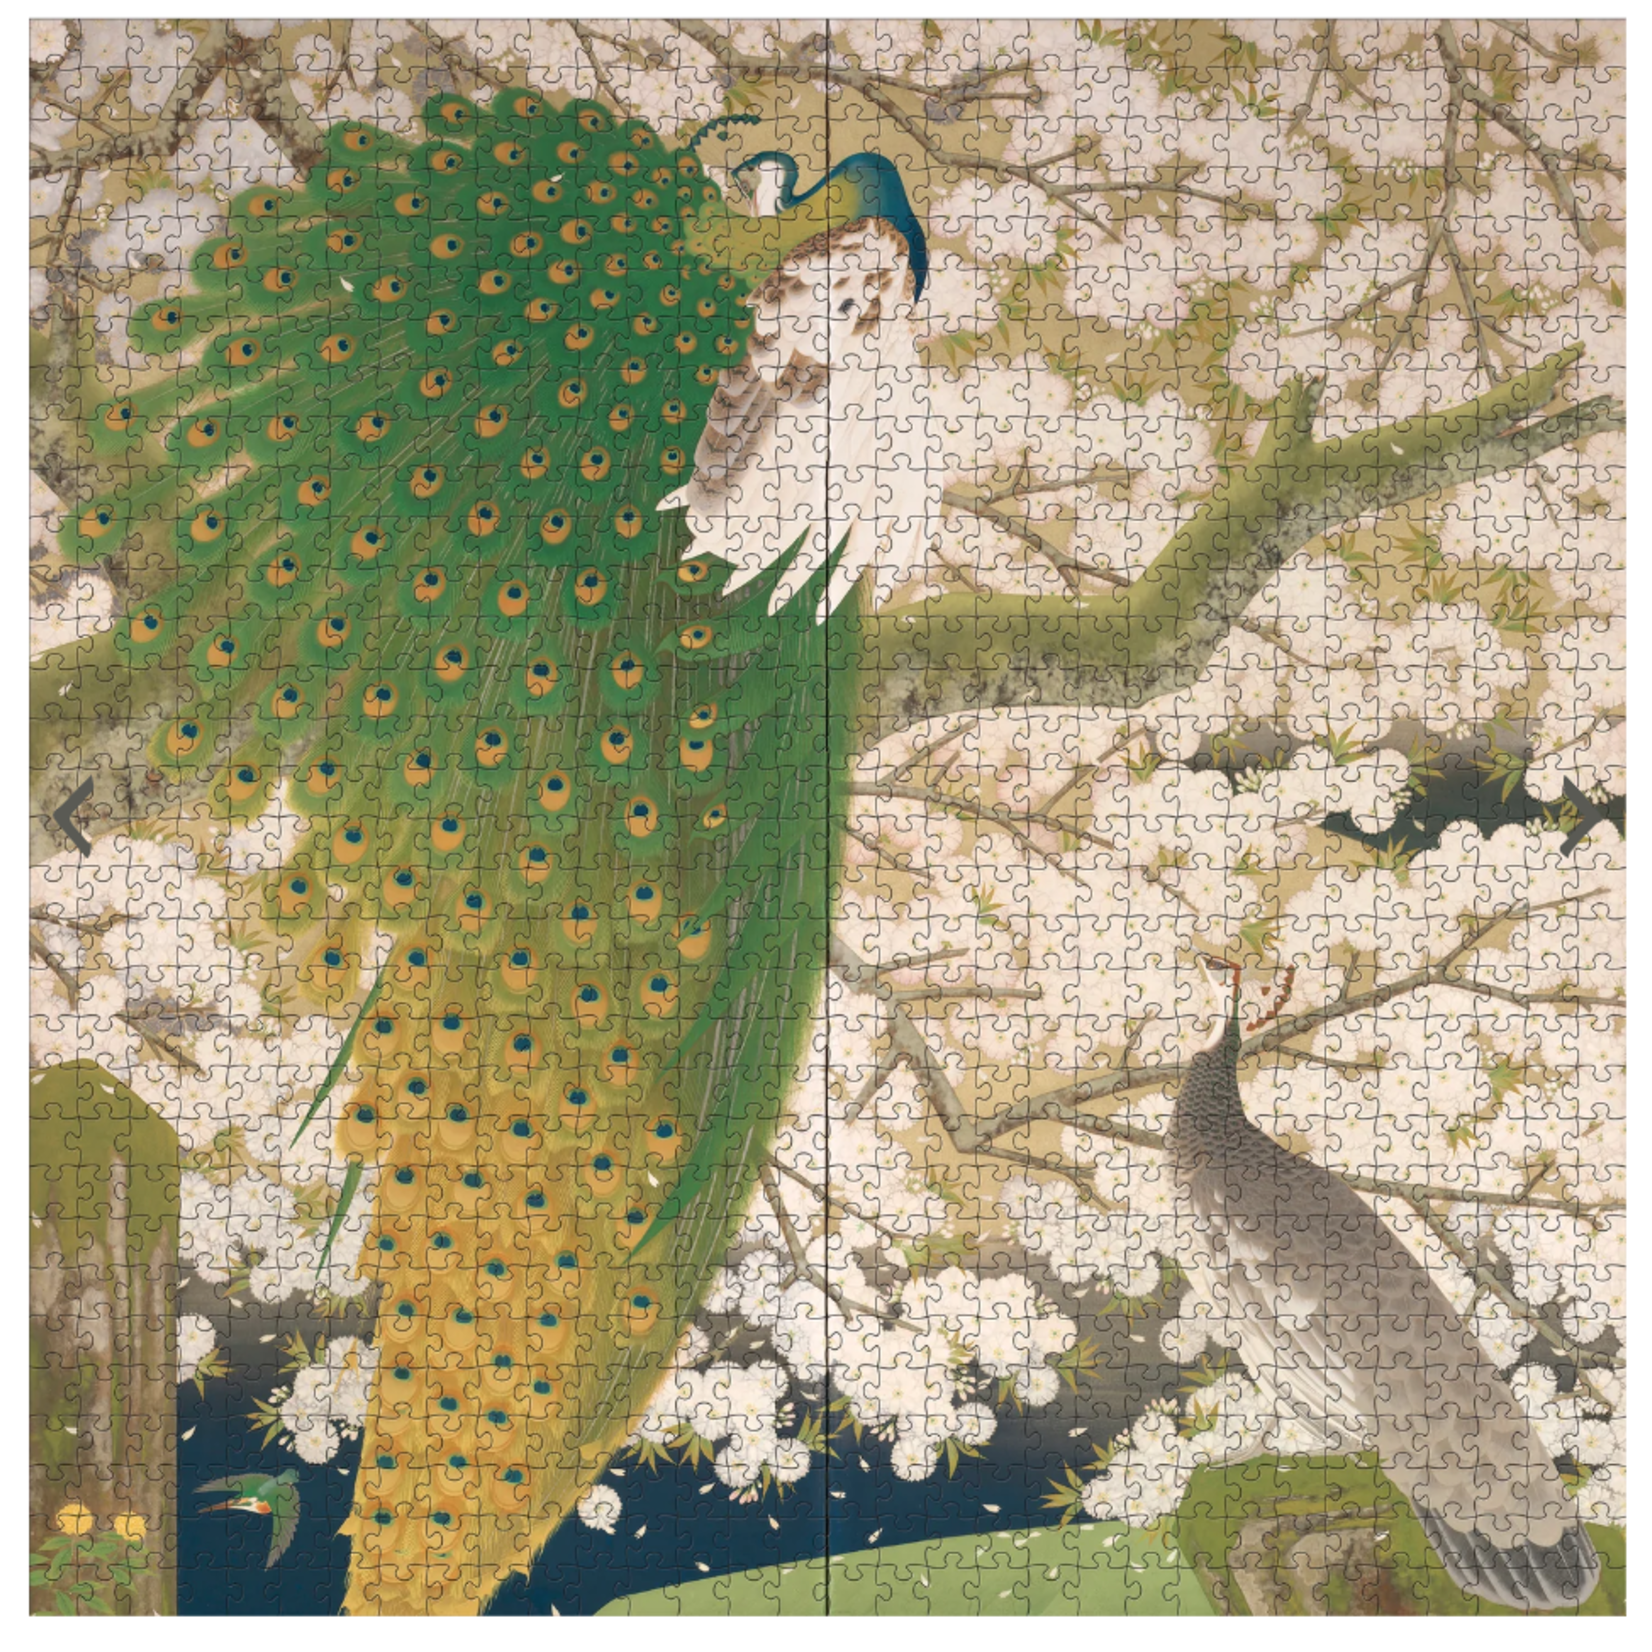 Pomegranate Peacocks and Cherry Blossoms by Imazu Tatsuyuki, 1000-Piece Jigsaw Puzzle